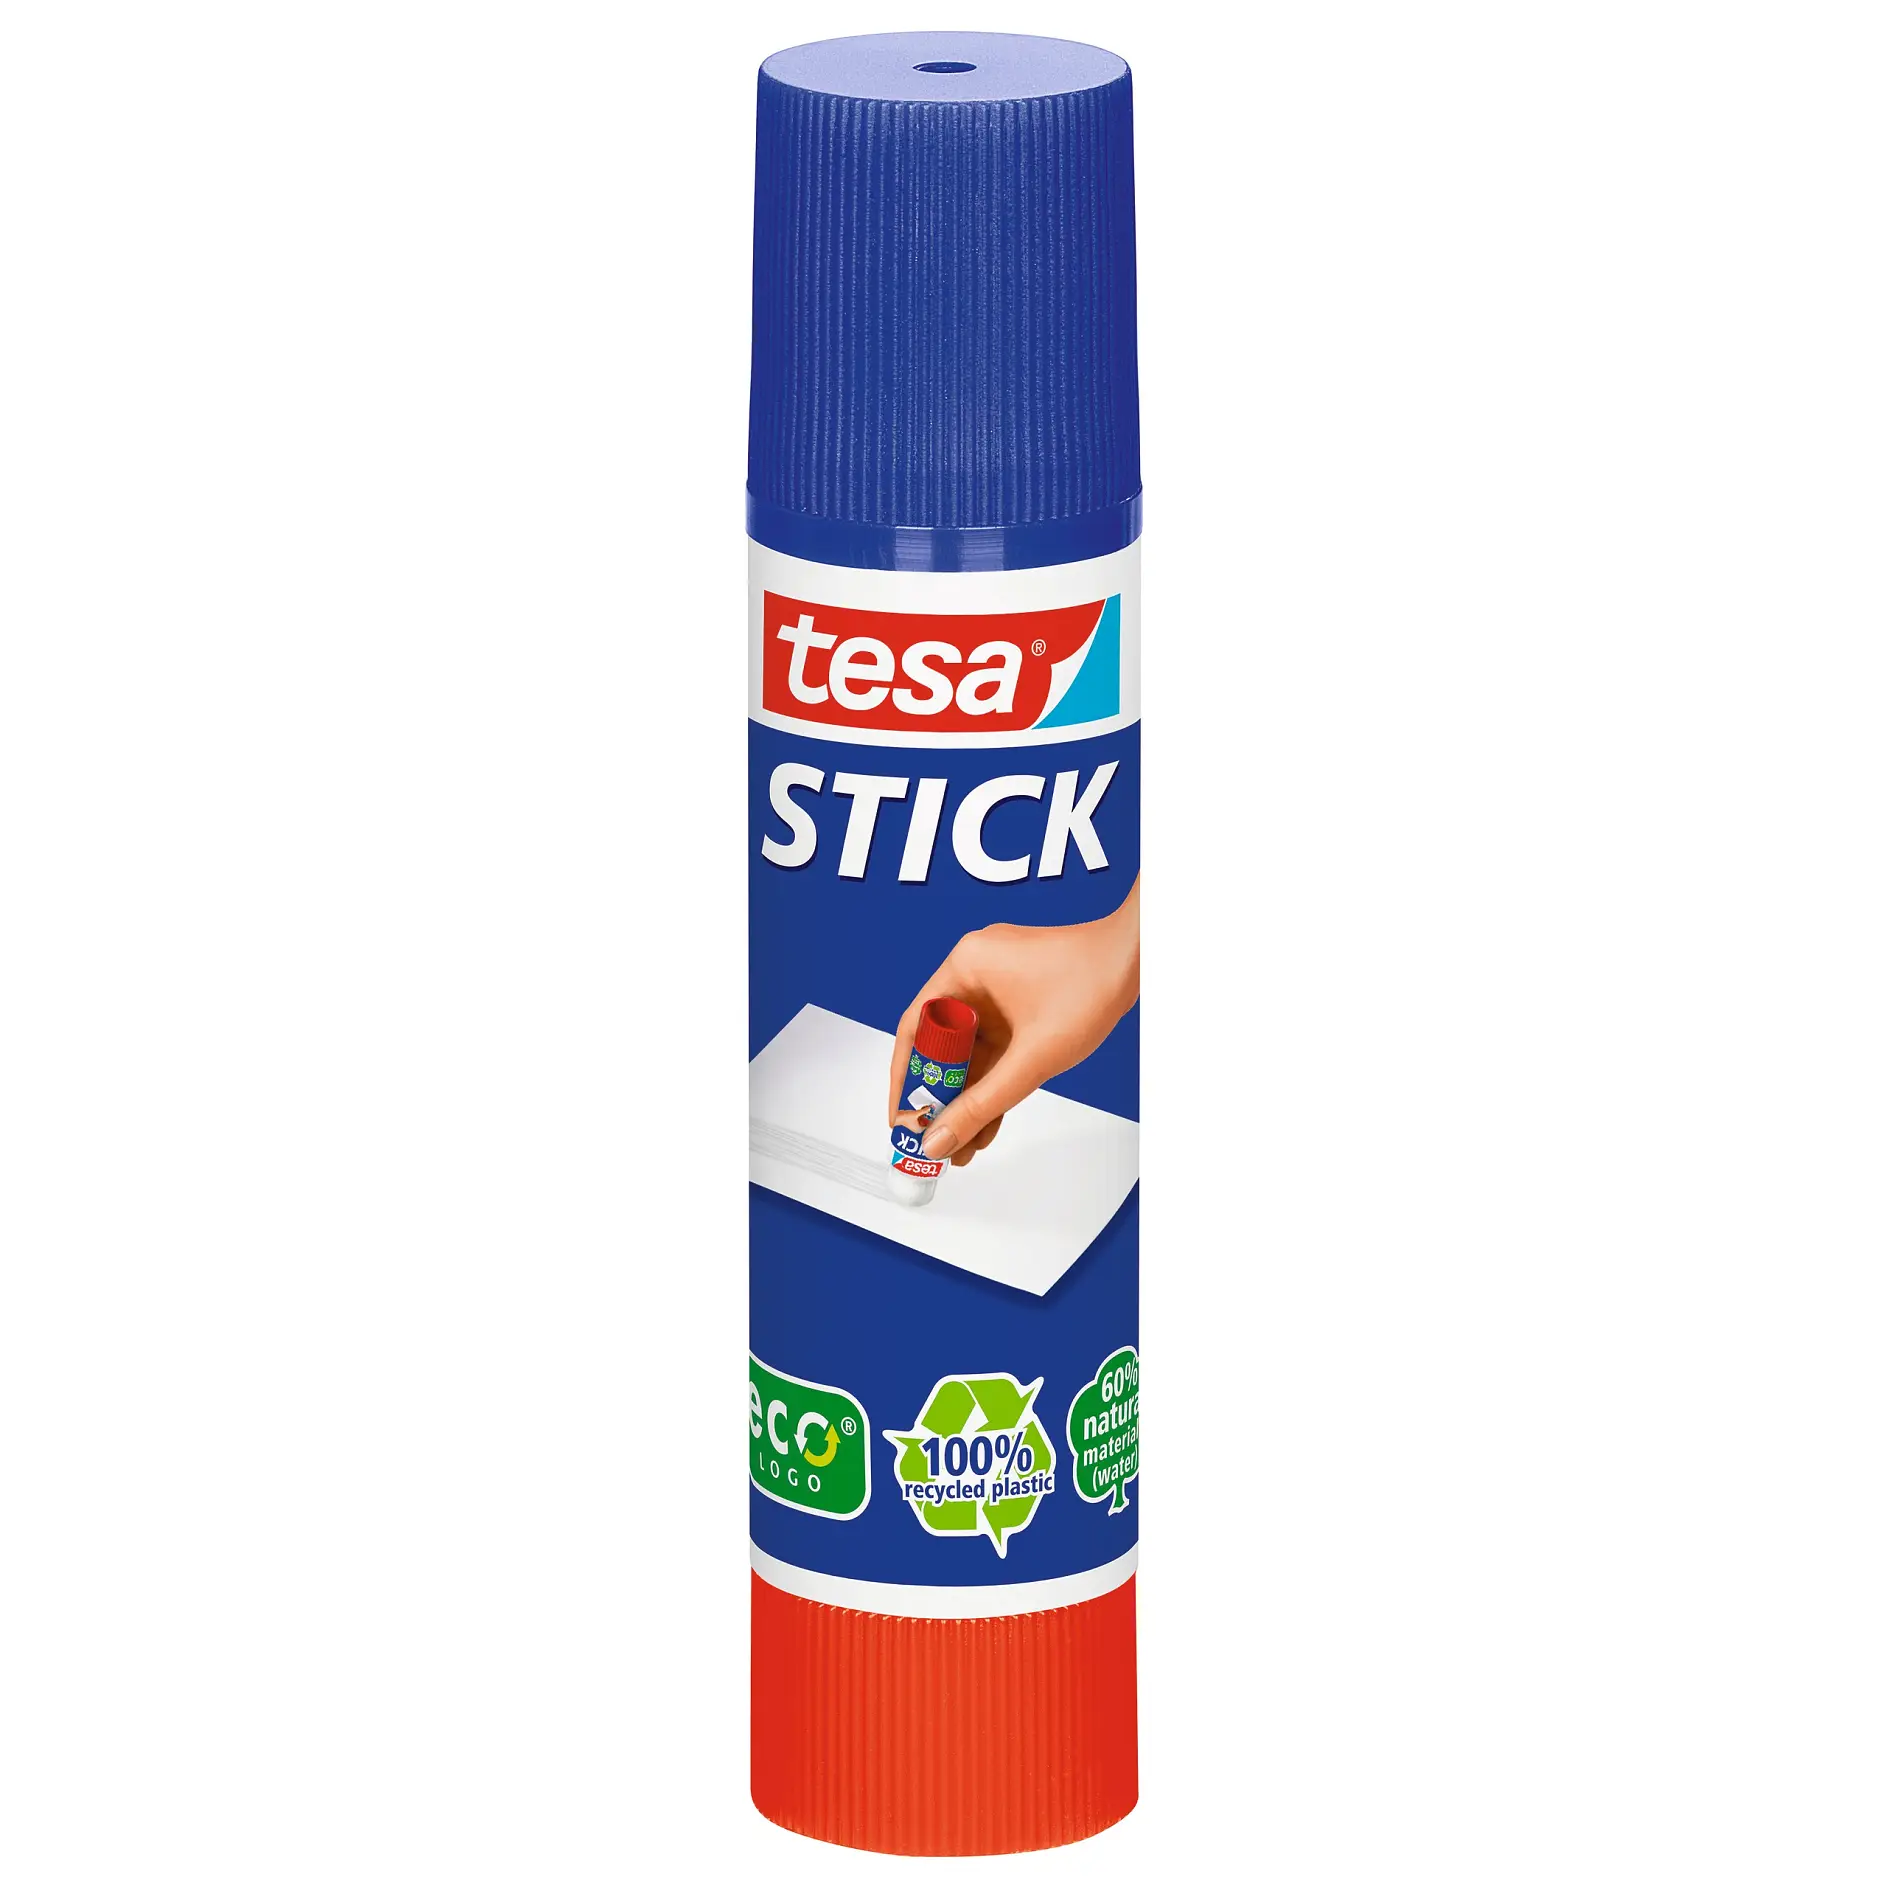 [en-en] tesa Glue stick 10g